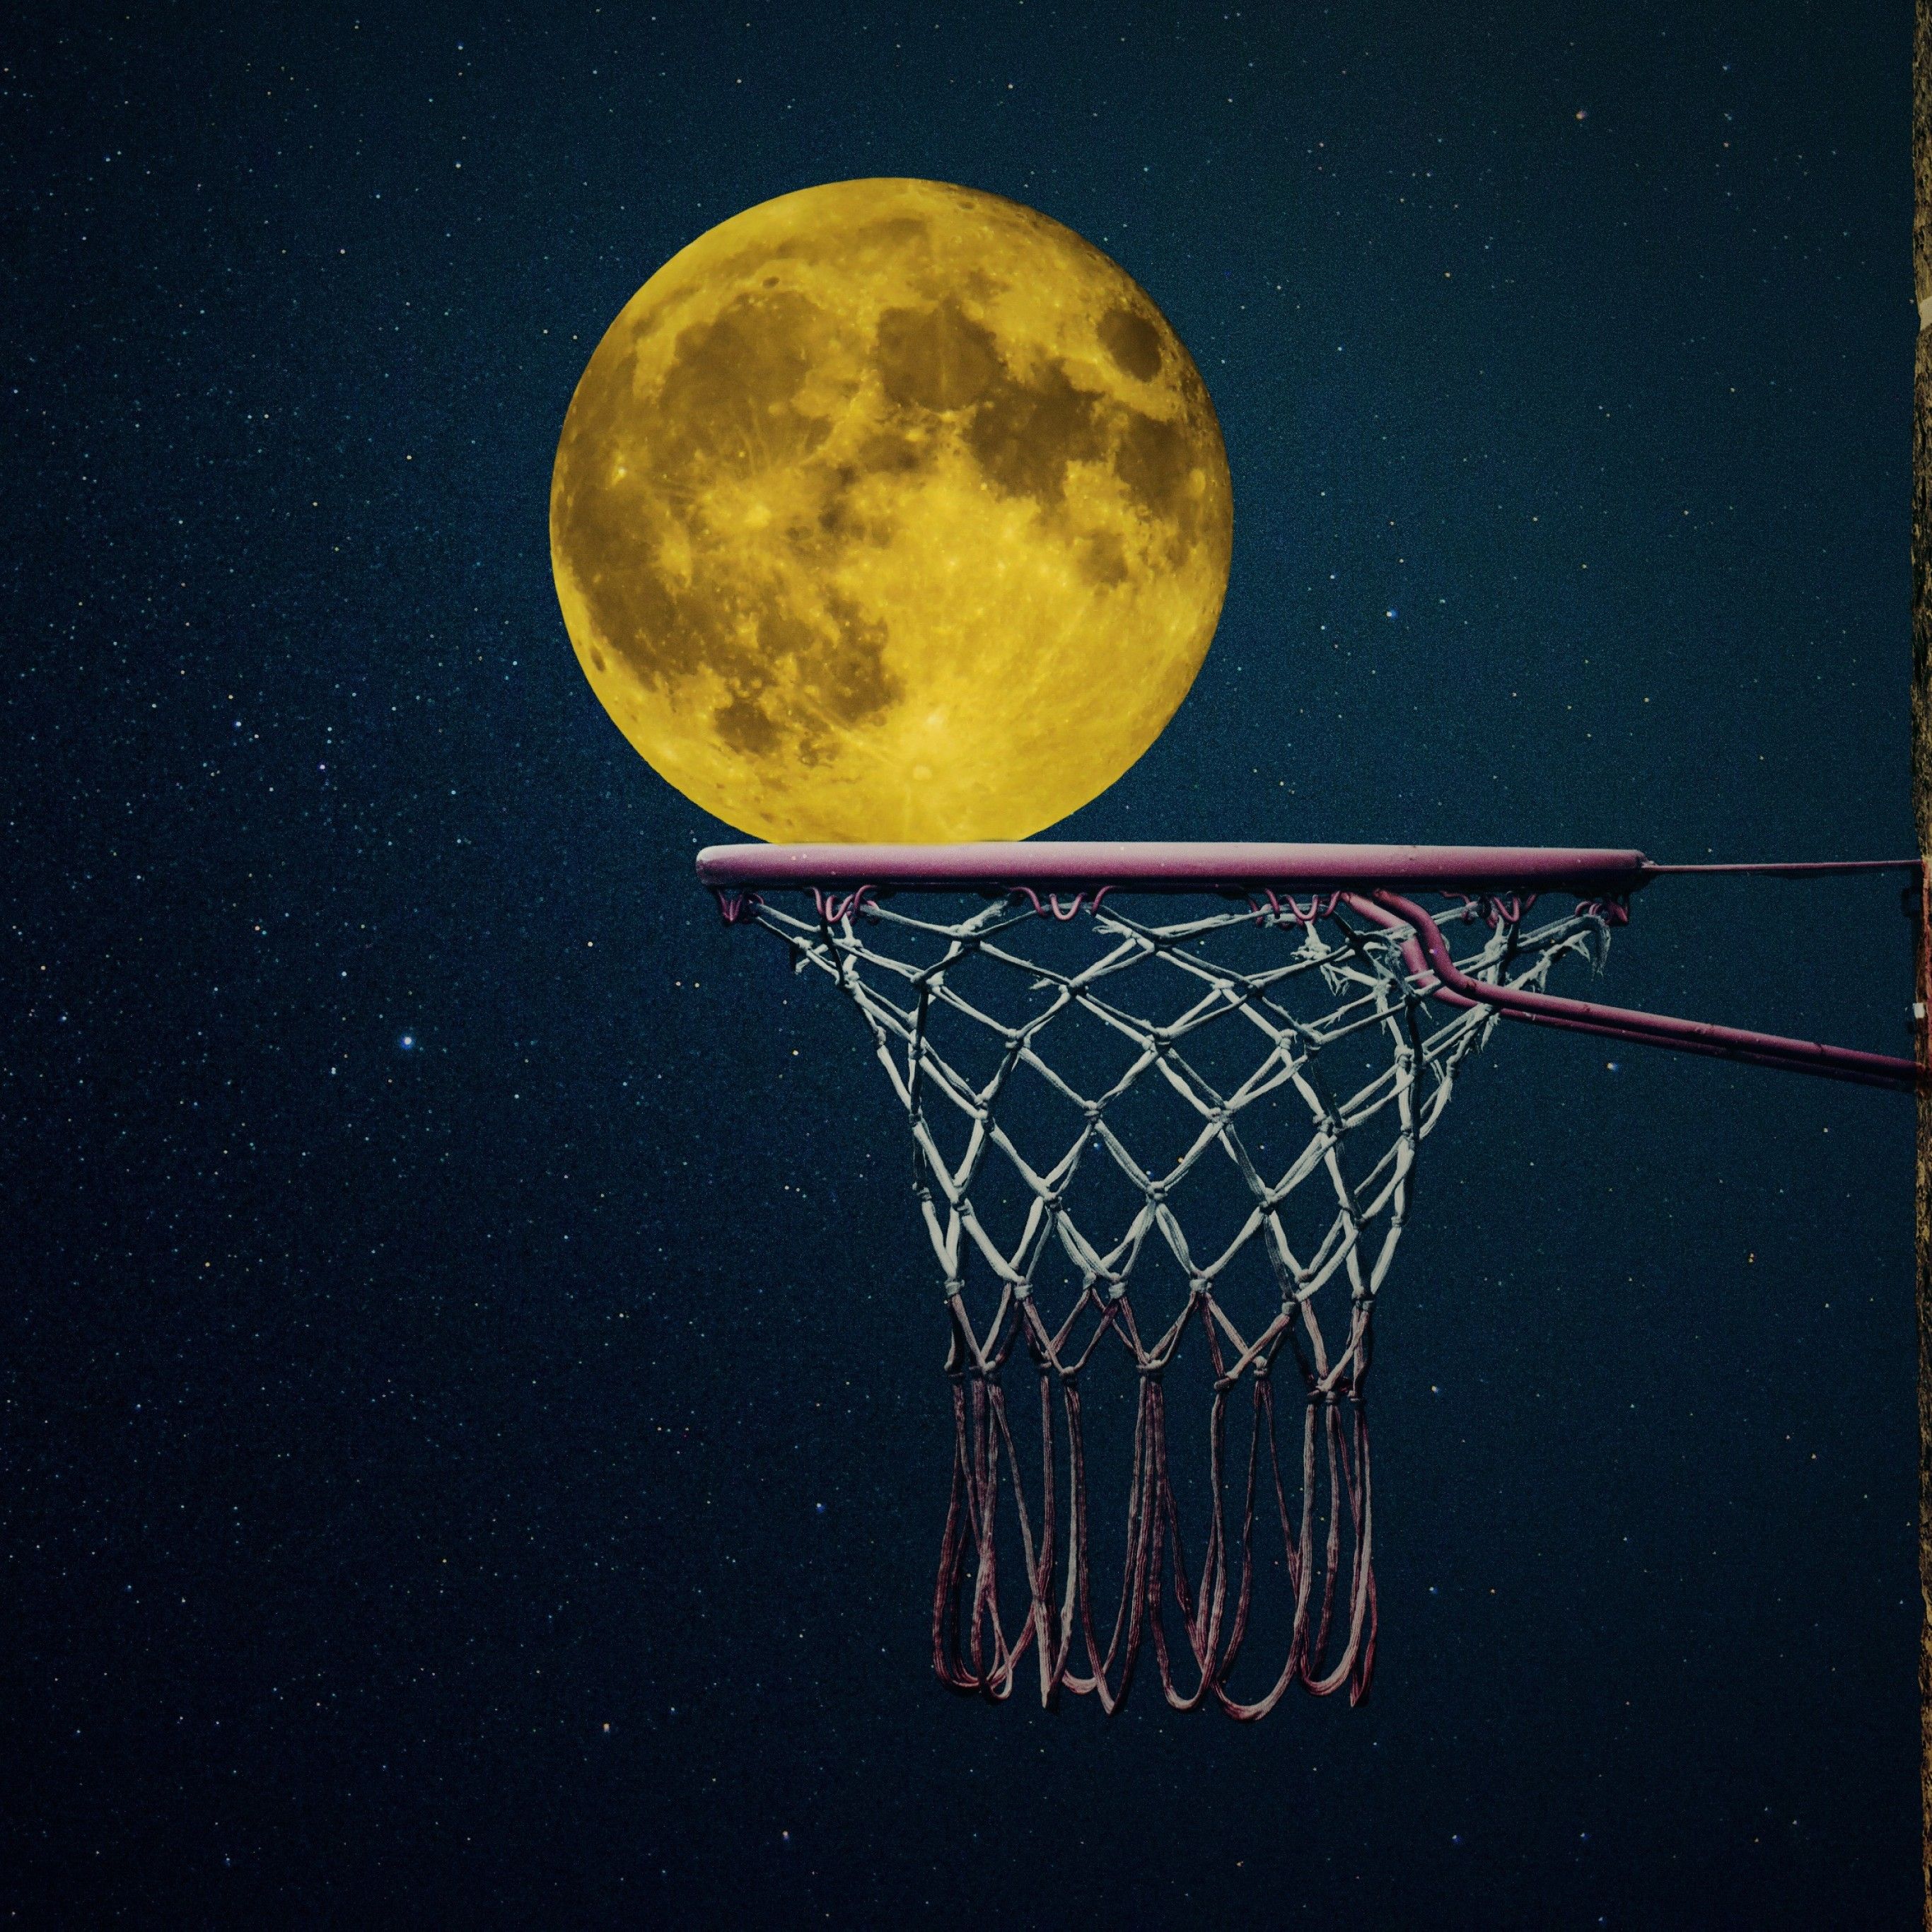 Full moon 4K Wallpaper, Basketball ring, Night sky, Illustration, Dark background, Stars, Photography